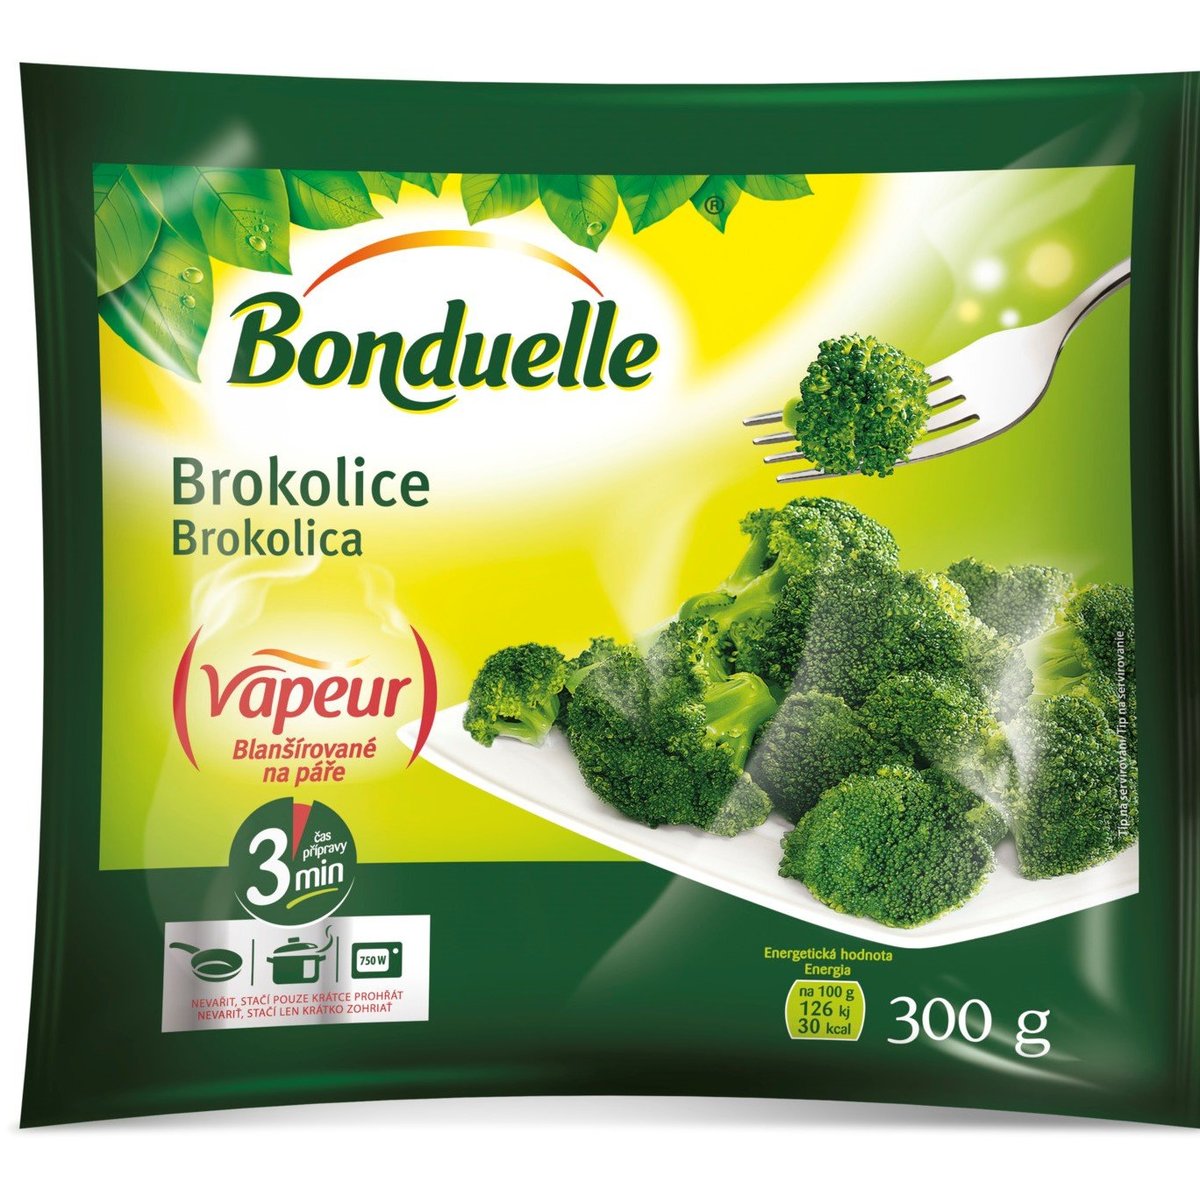 Bonduelle Vapeur Brokolice